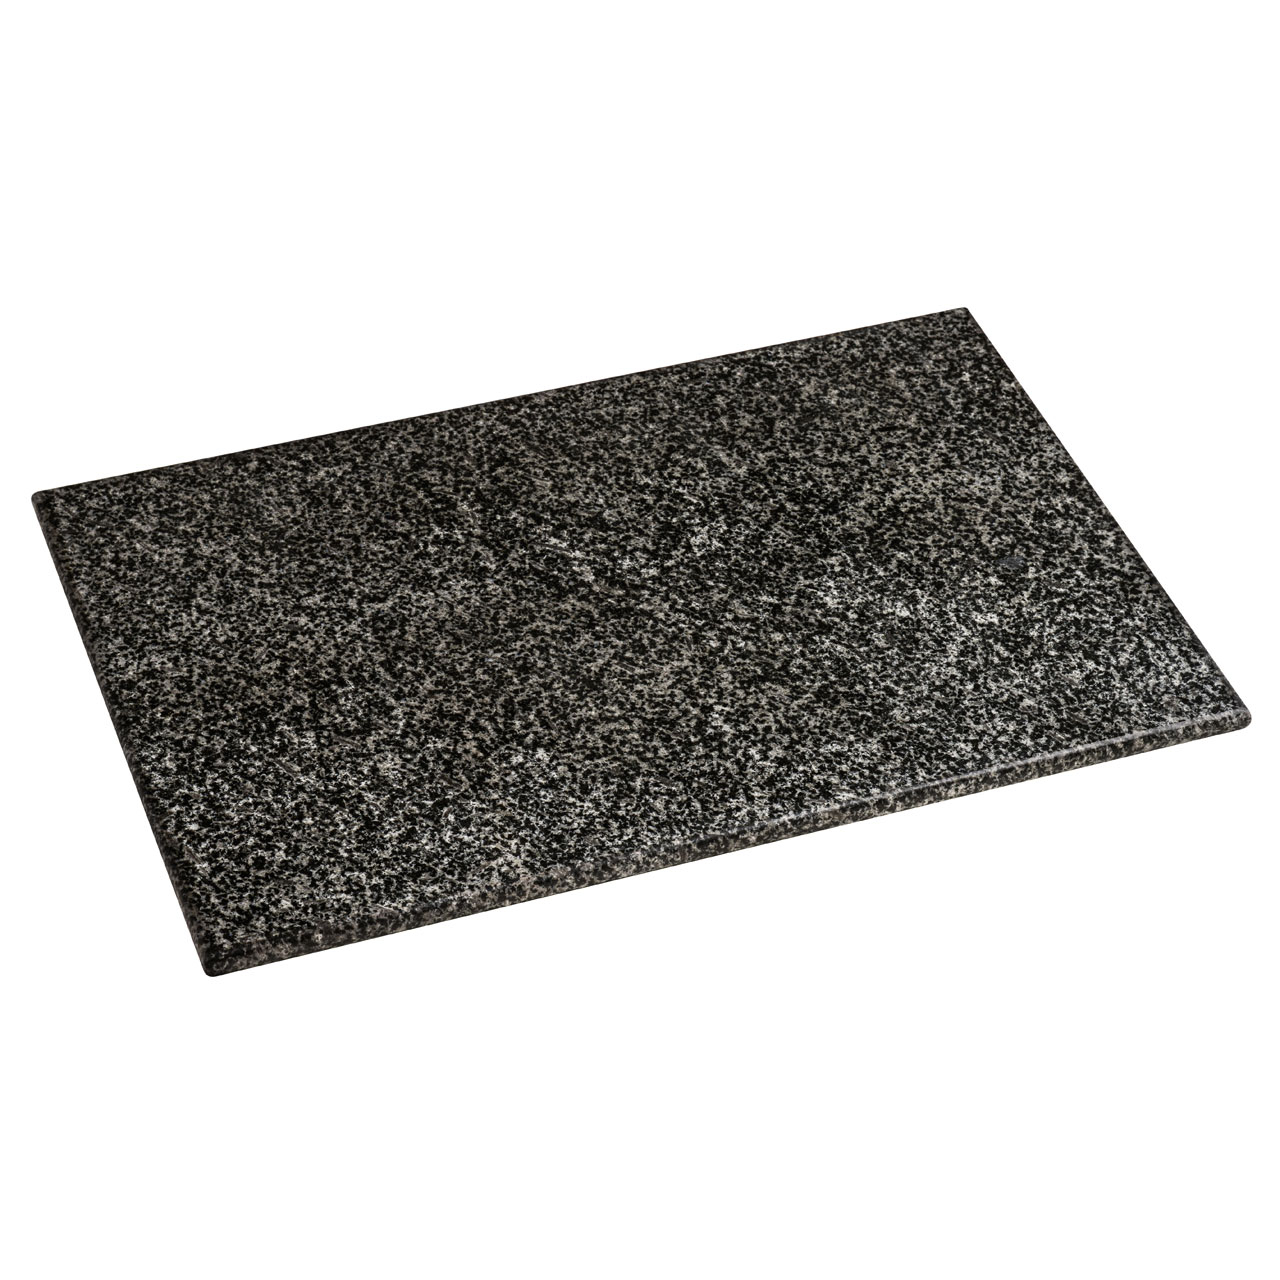 Extra Large New Rectangular Black Quality Granite Chopping Board Worktop Saver